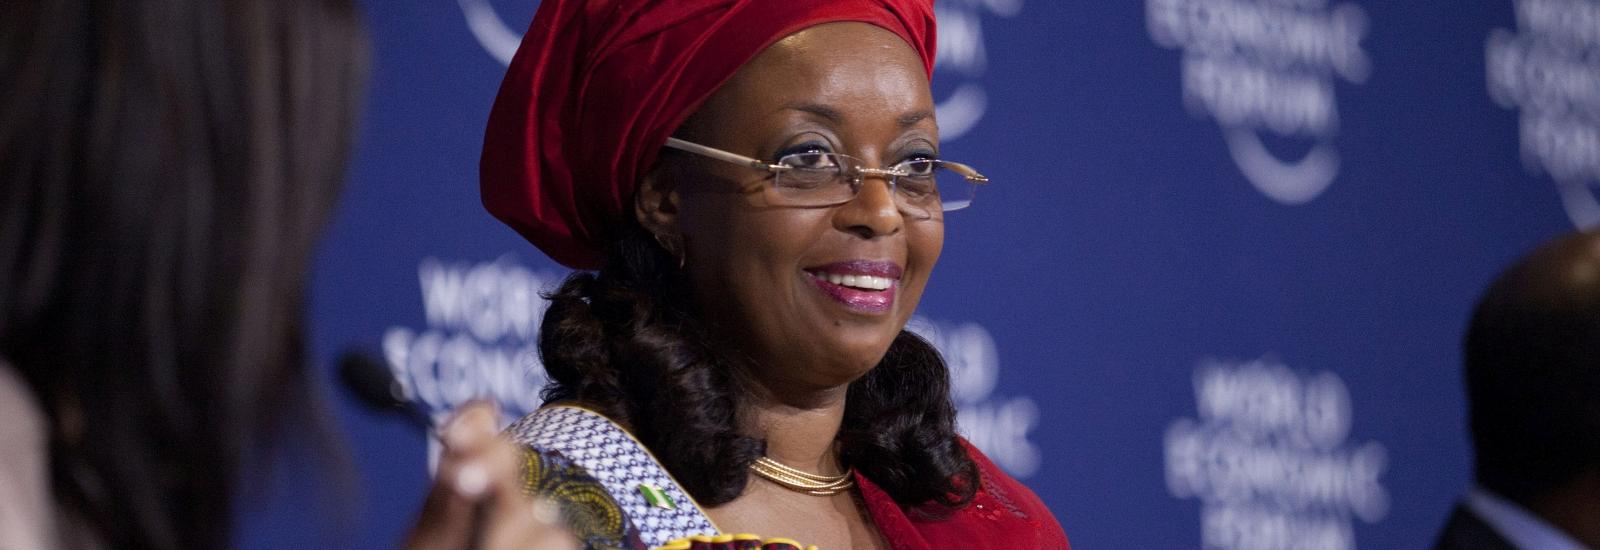 ©Flickr Diezani K. Alison-Madueke - World Economic Forum on Africa 2012